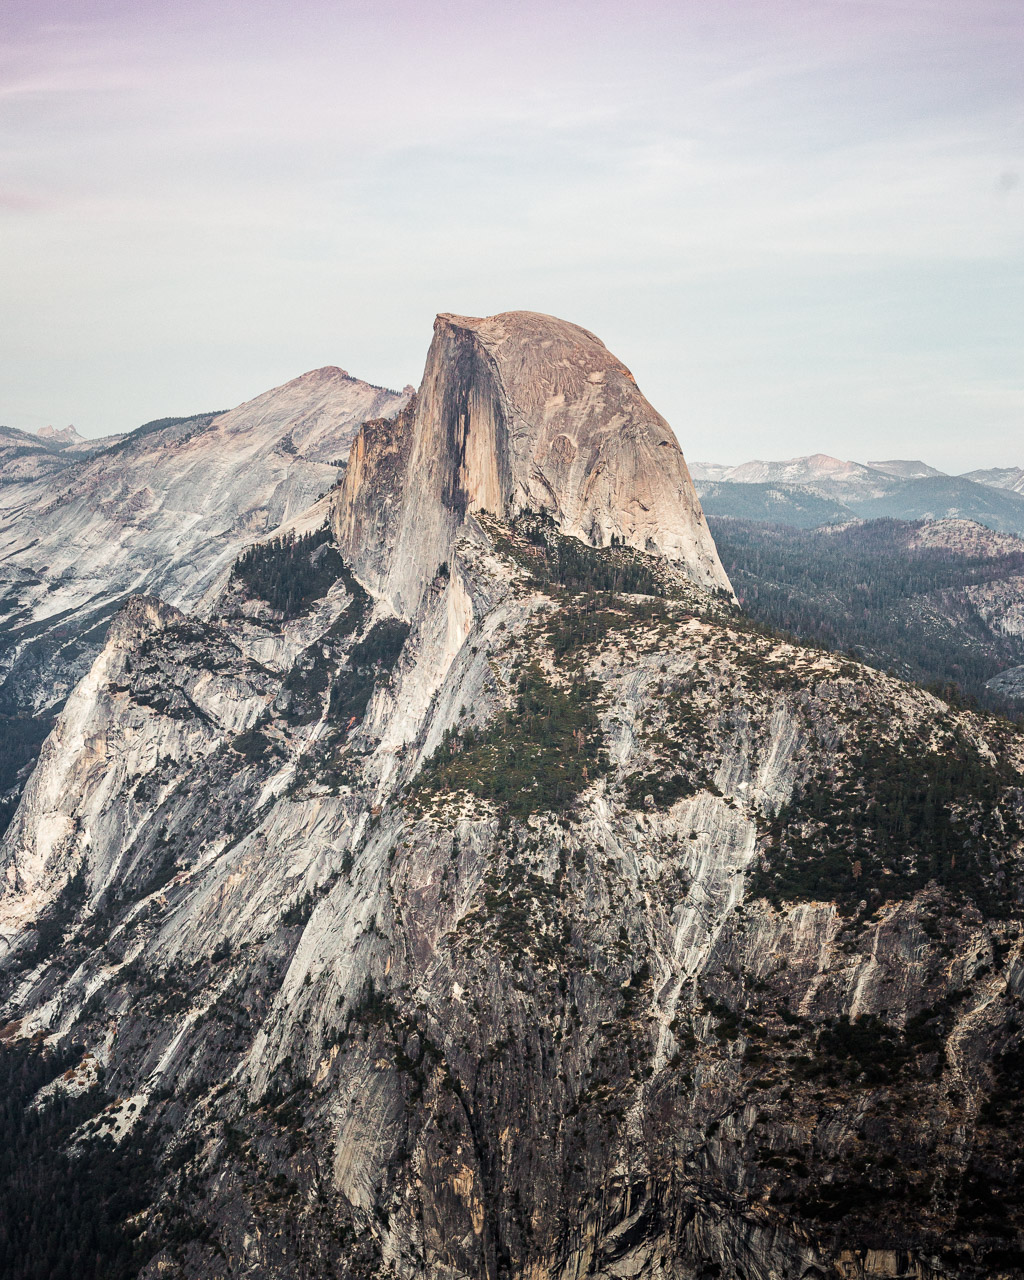 Northwest-America-Yosemite-National-Park-USA-2016-_MG_4821